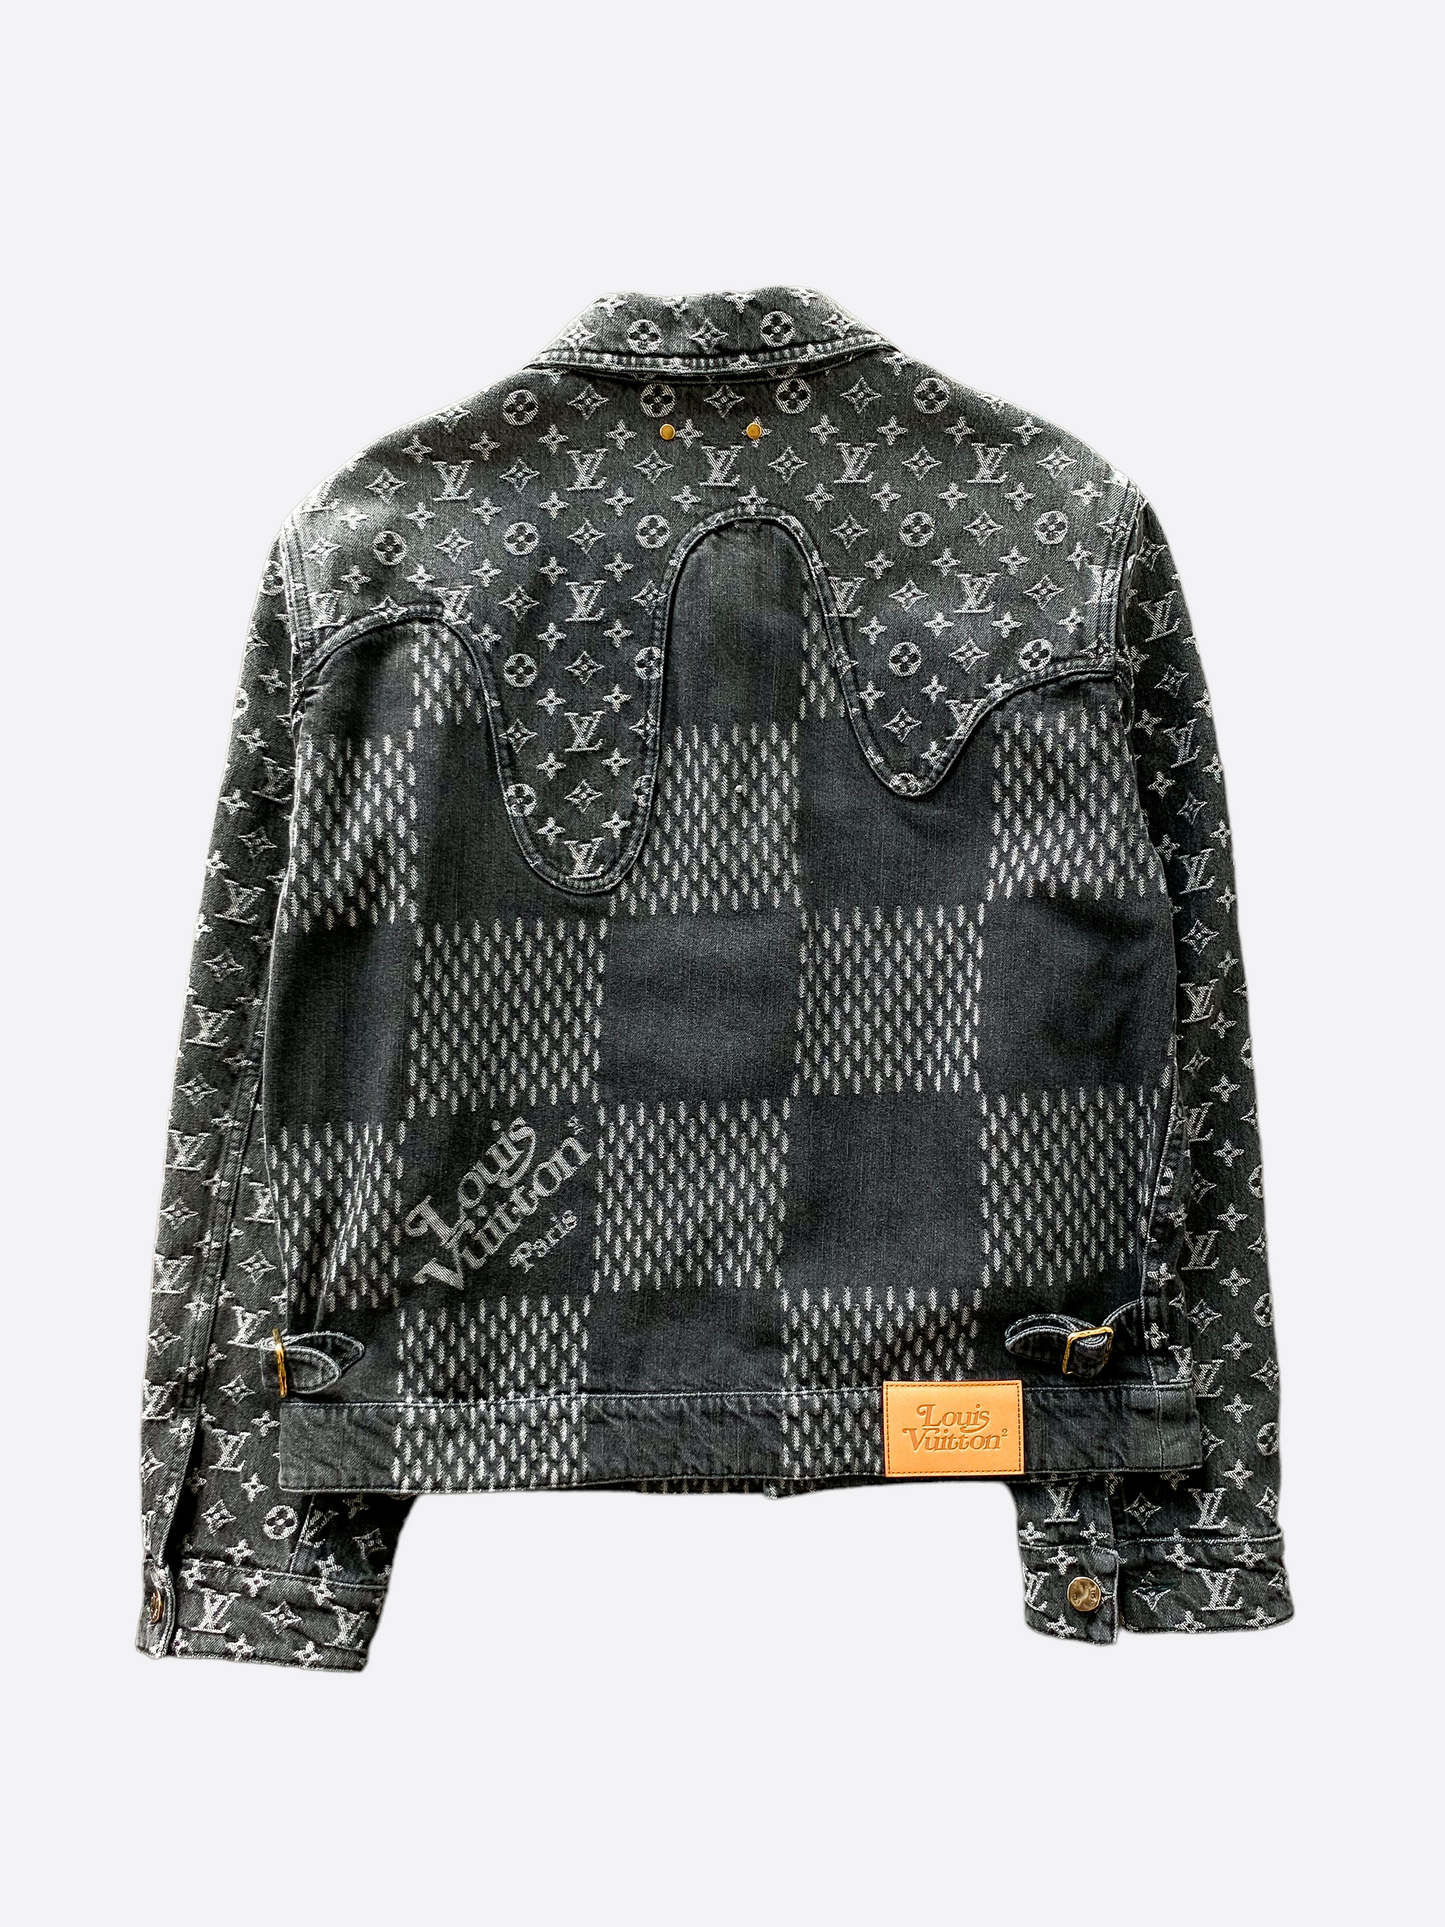 Louis Vuitton x Nigo denim jacket Tags and - Depop